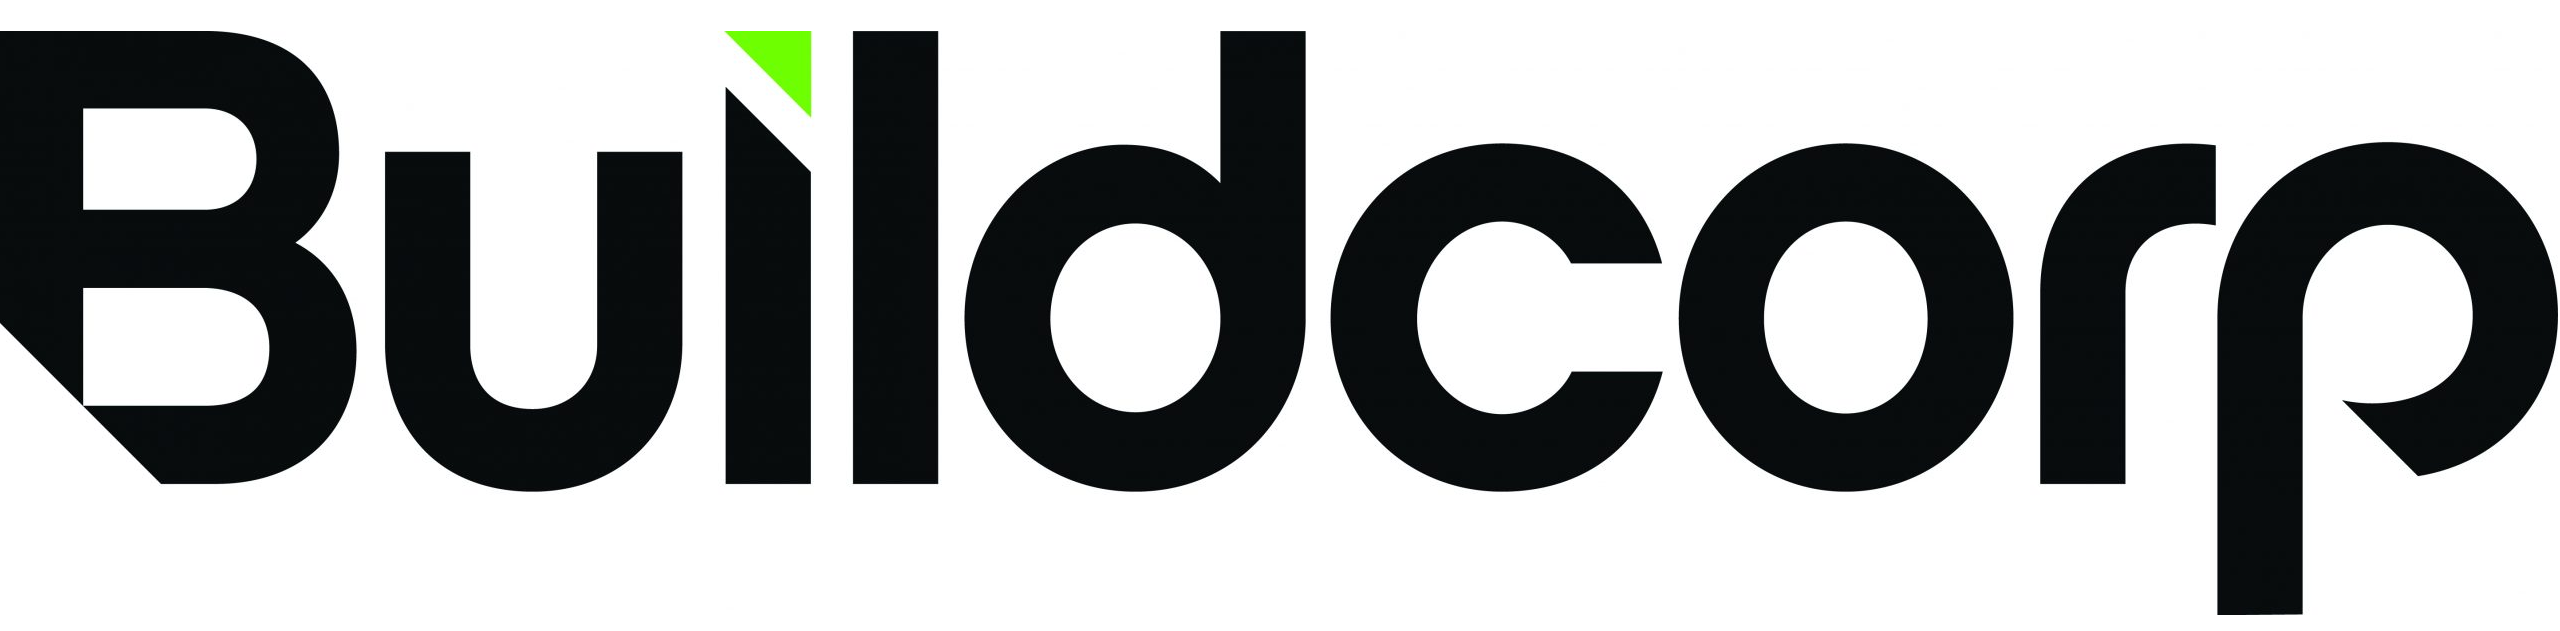 buildcorp logo 2